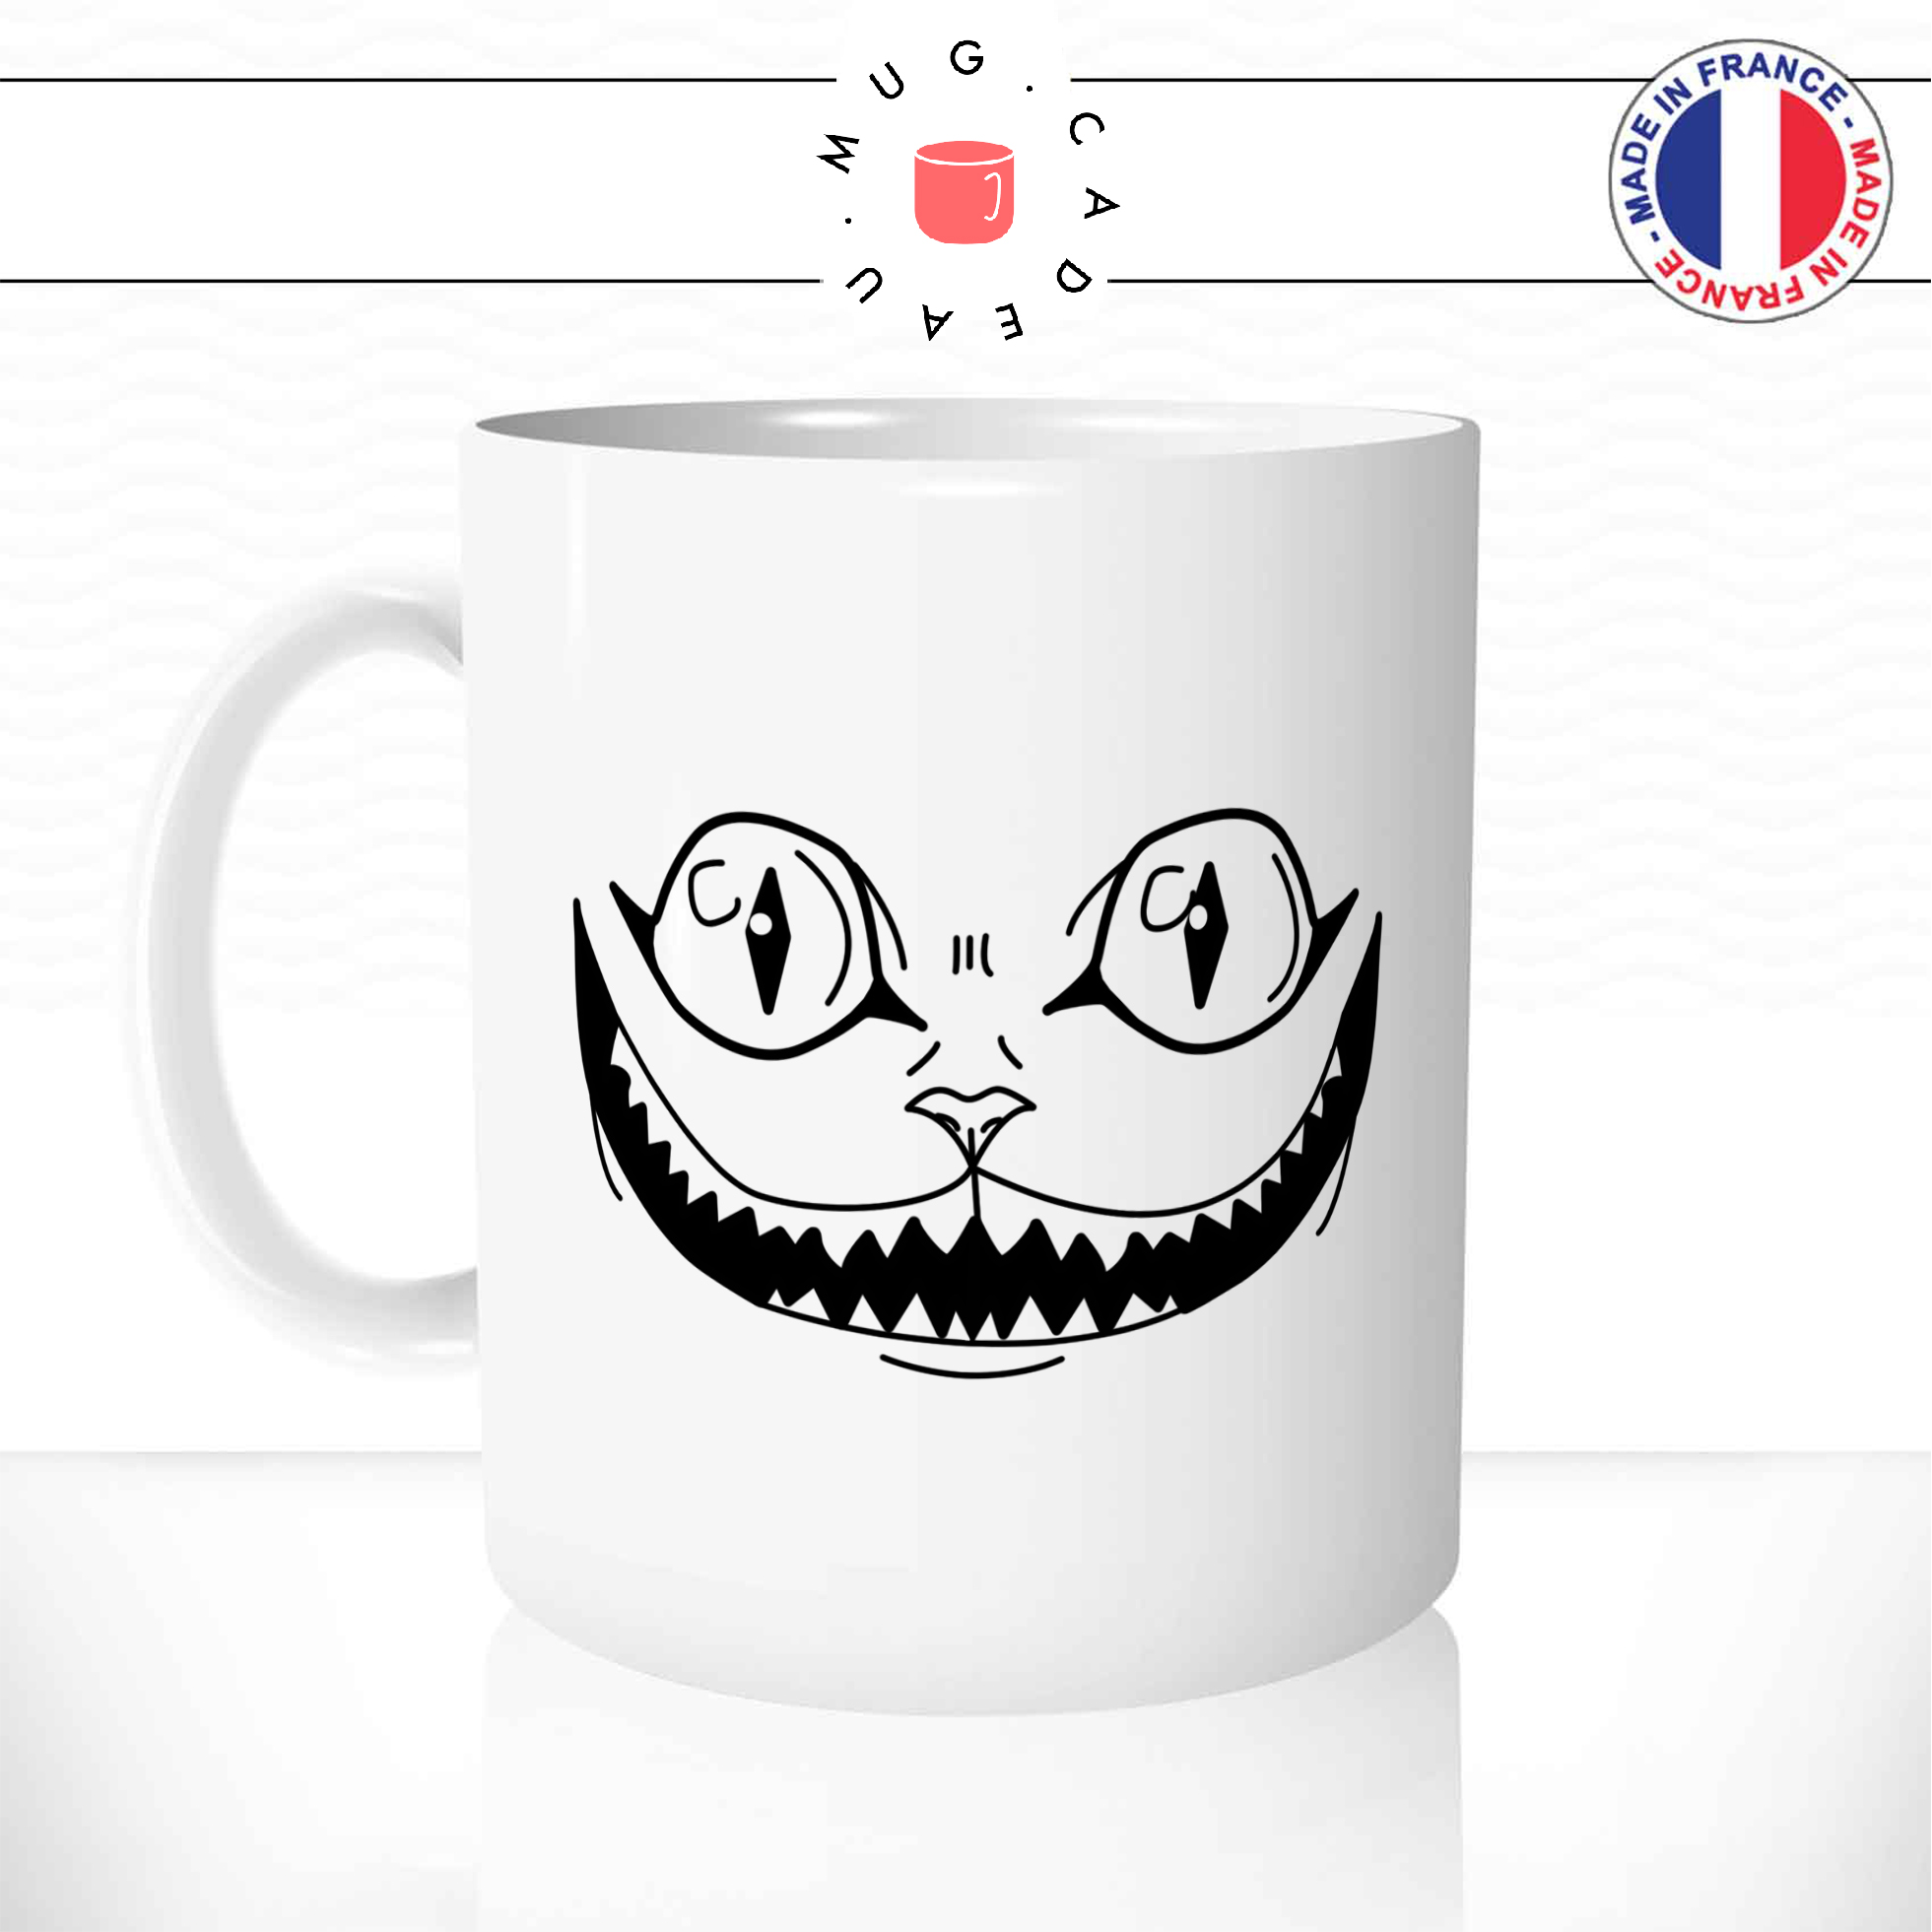 mug-tasse-ref25-chat-sourire-yeux-alice-gents-noir-blanc-cafe-the-mugs-tasses-personnalise-anse-gauche